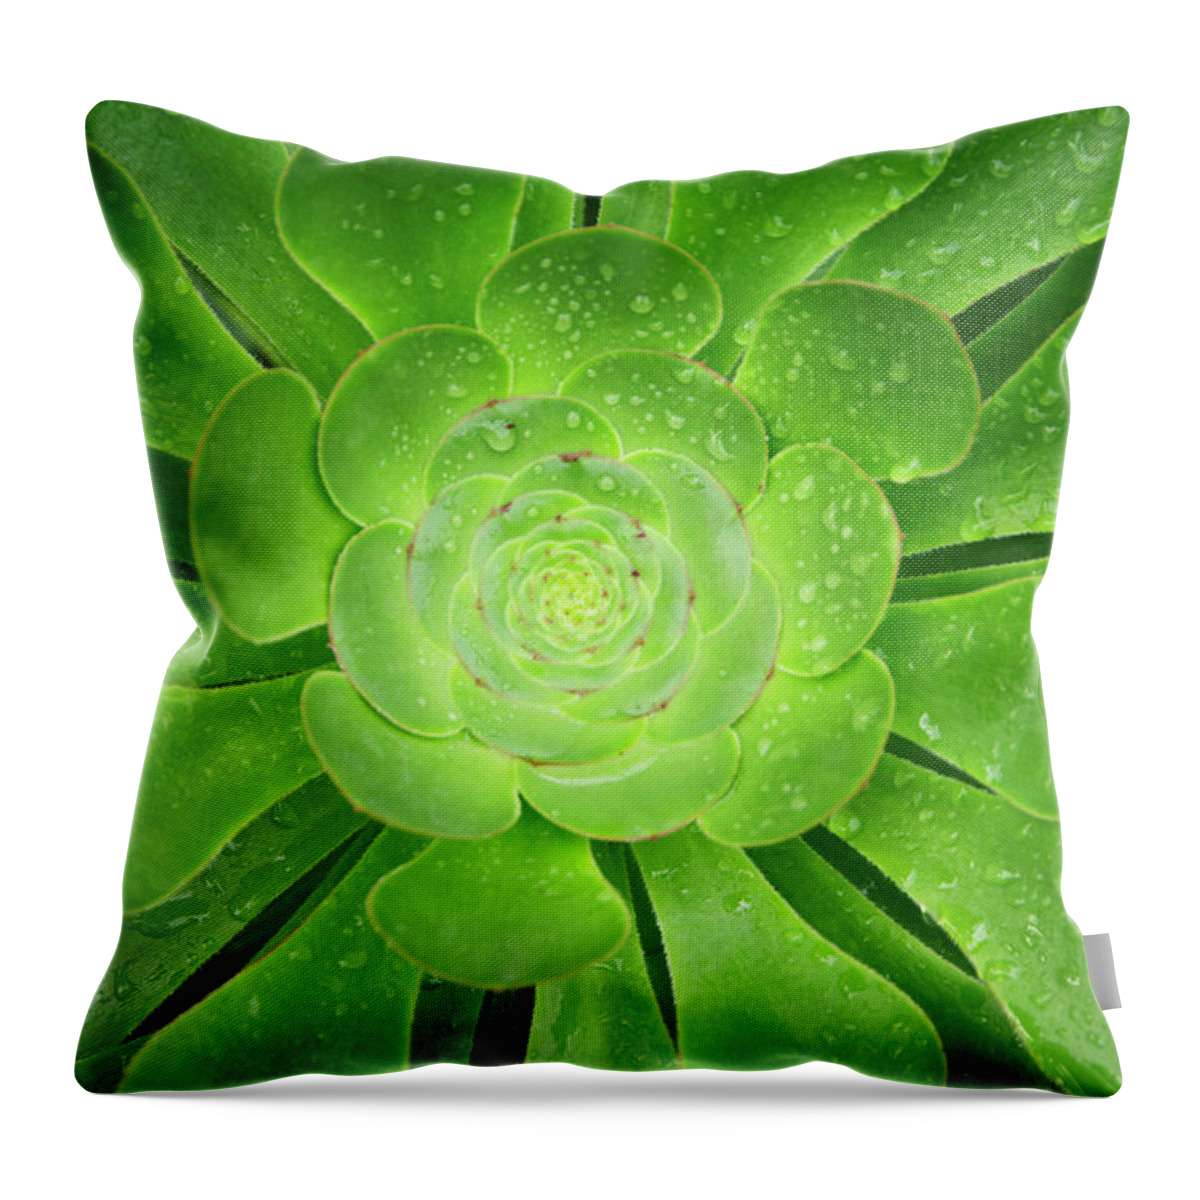 Outdoors Throw Pillow featuring the photograph Succulent Aeonium Undulatum Splashed by Liz Whitaker